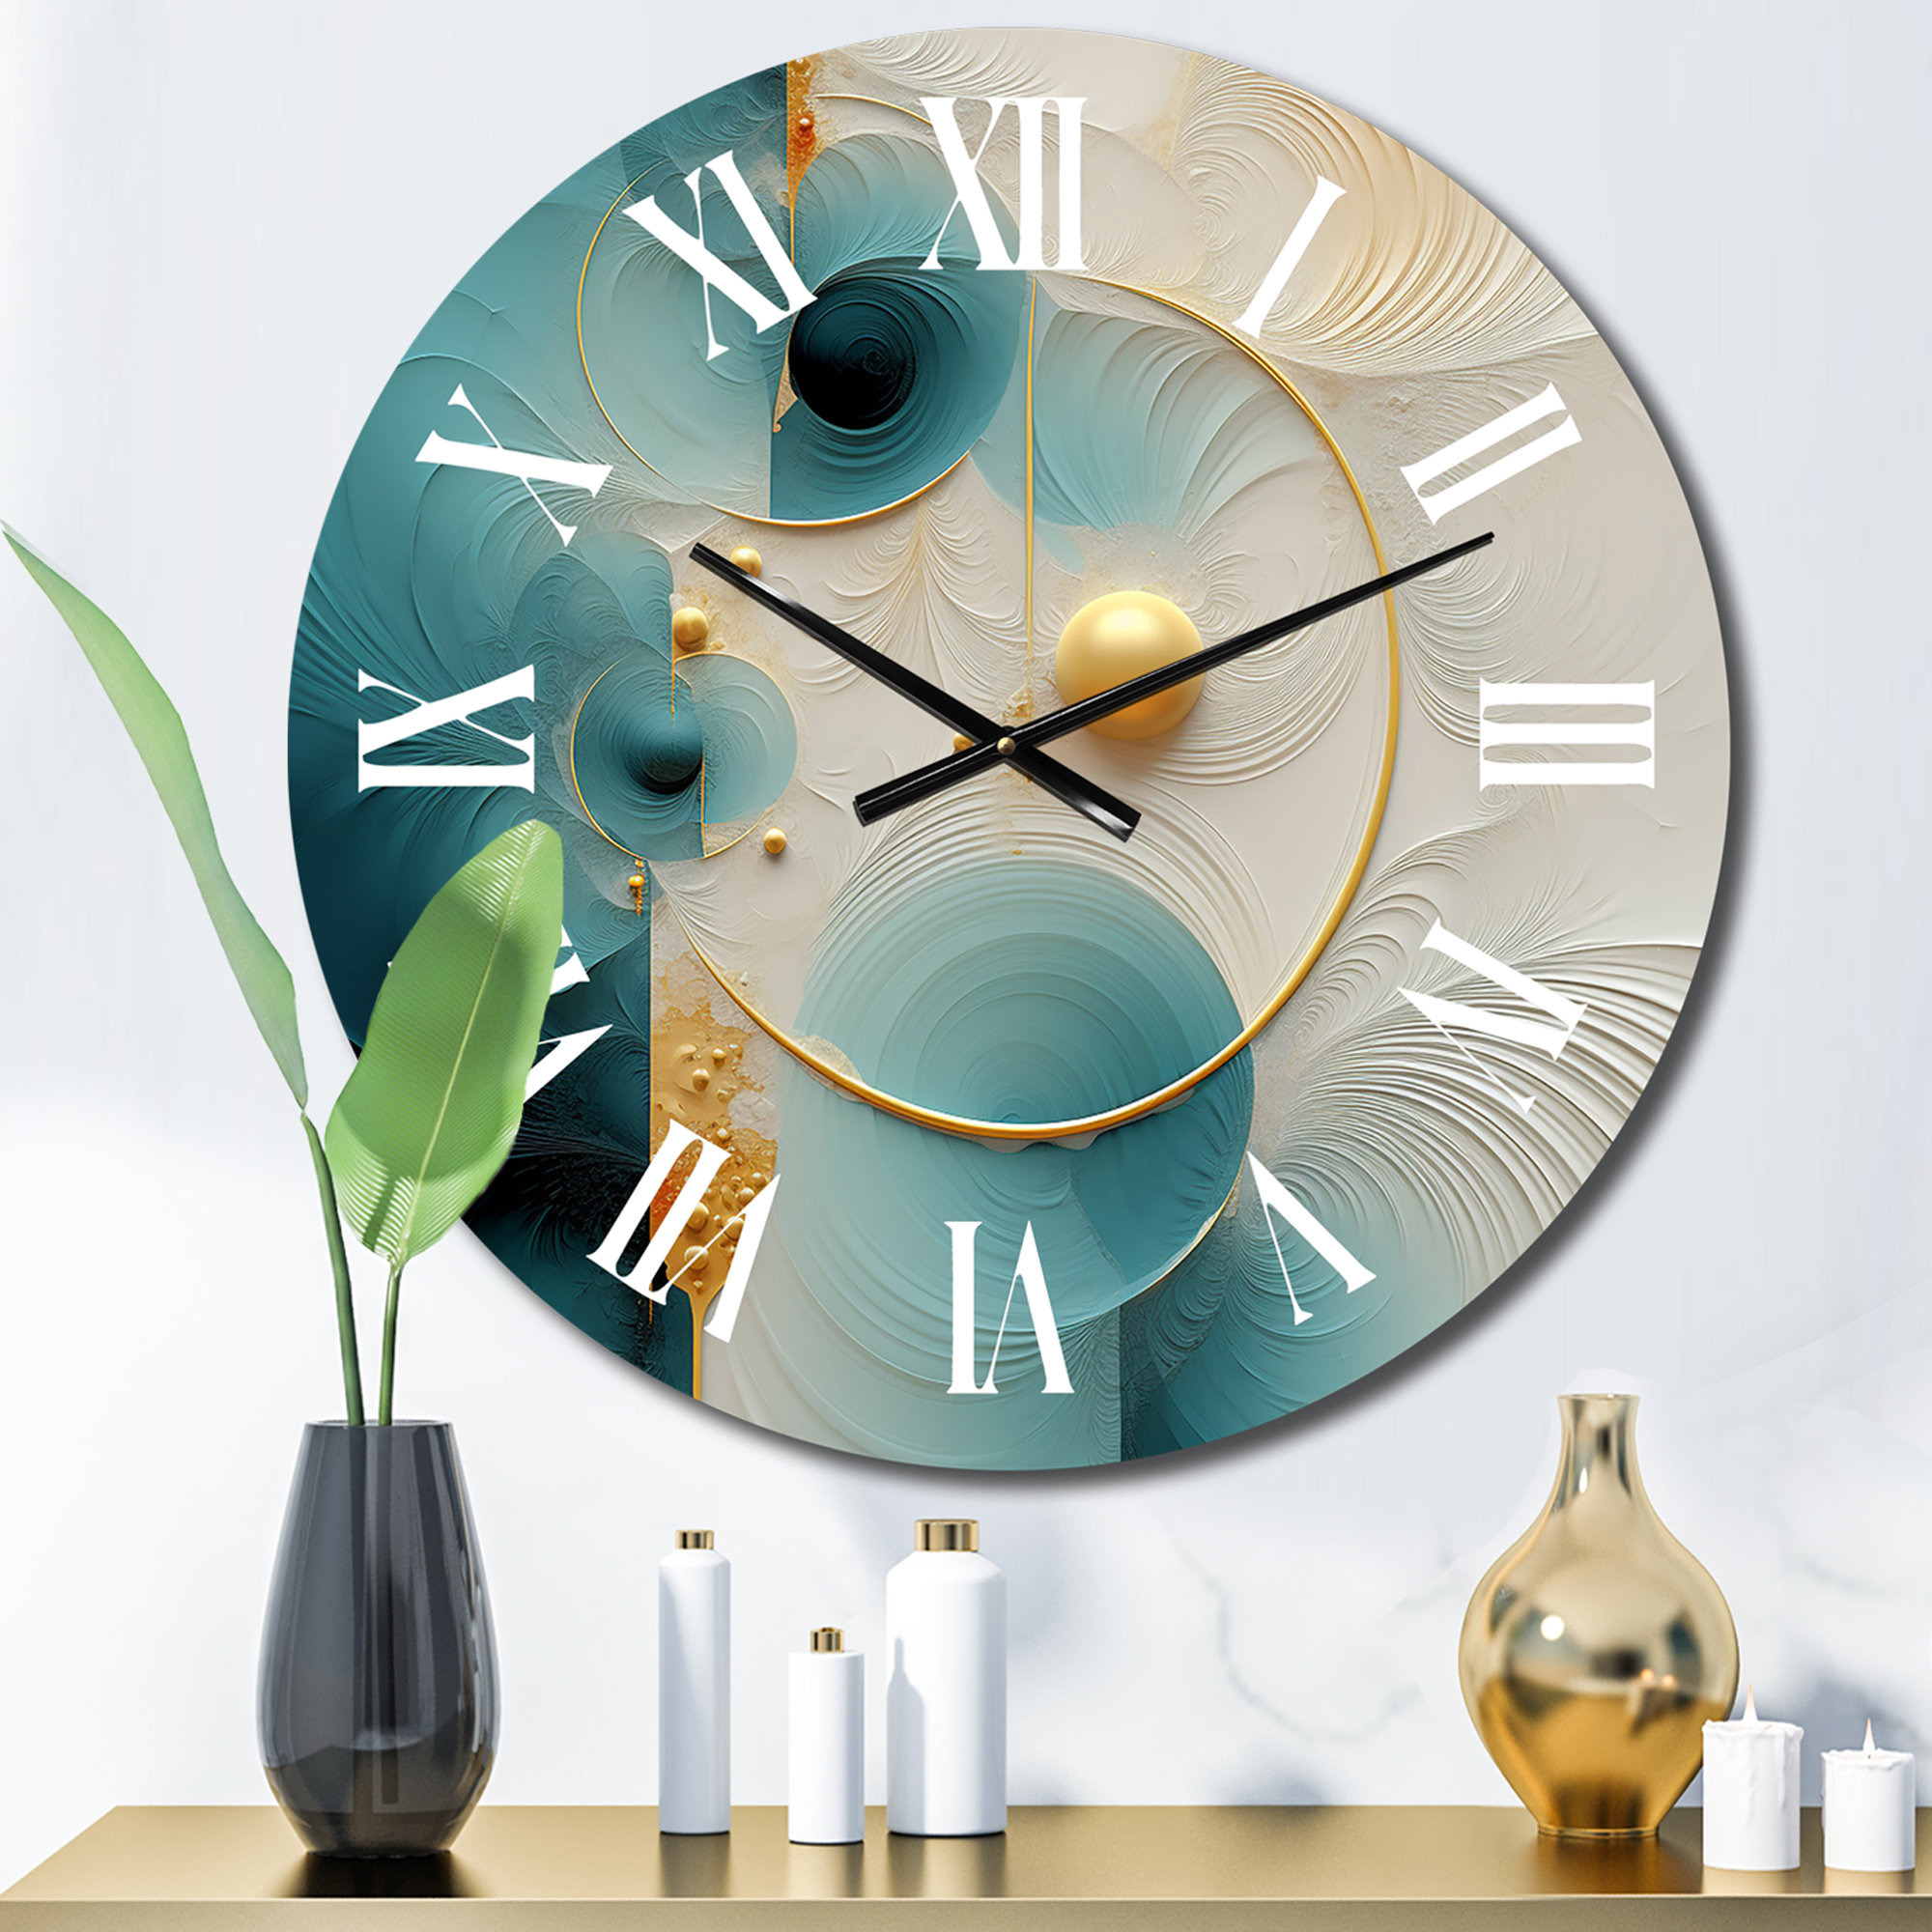 DesignArt Metal Wall Clock | Wayfair